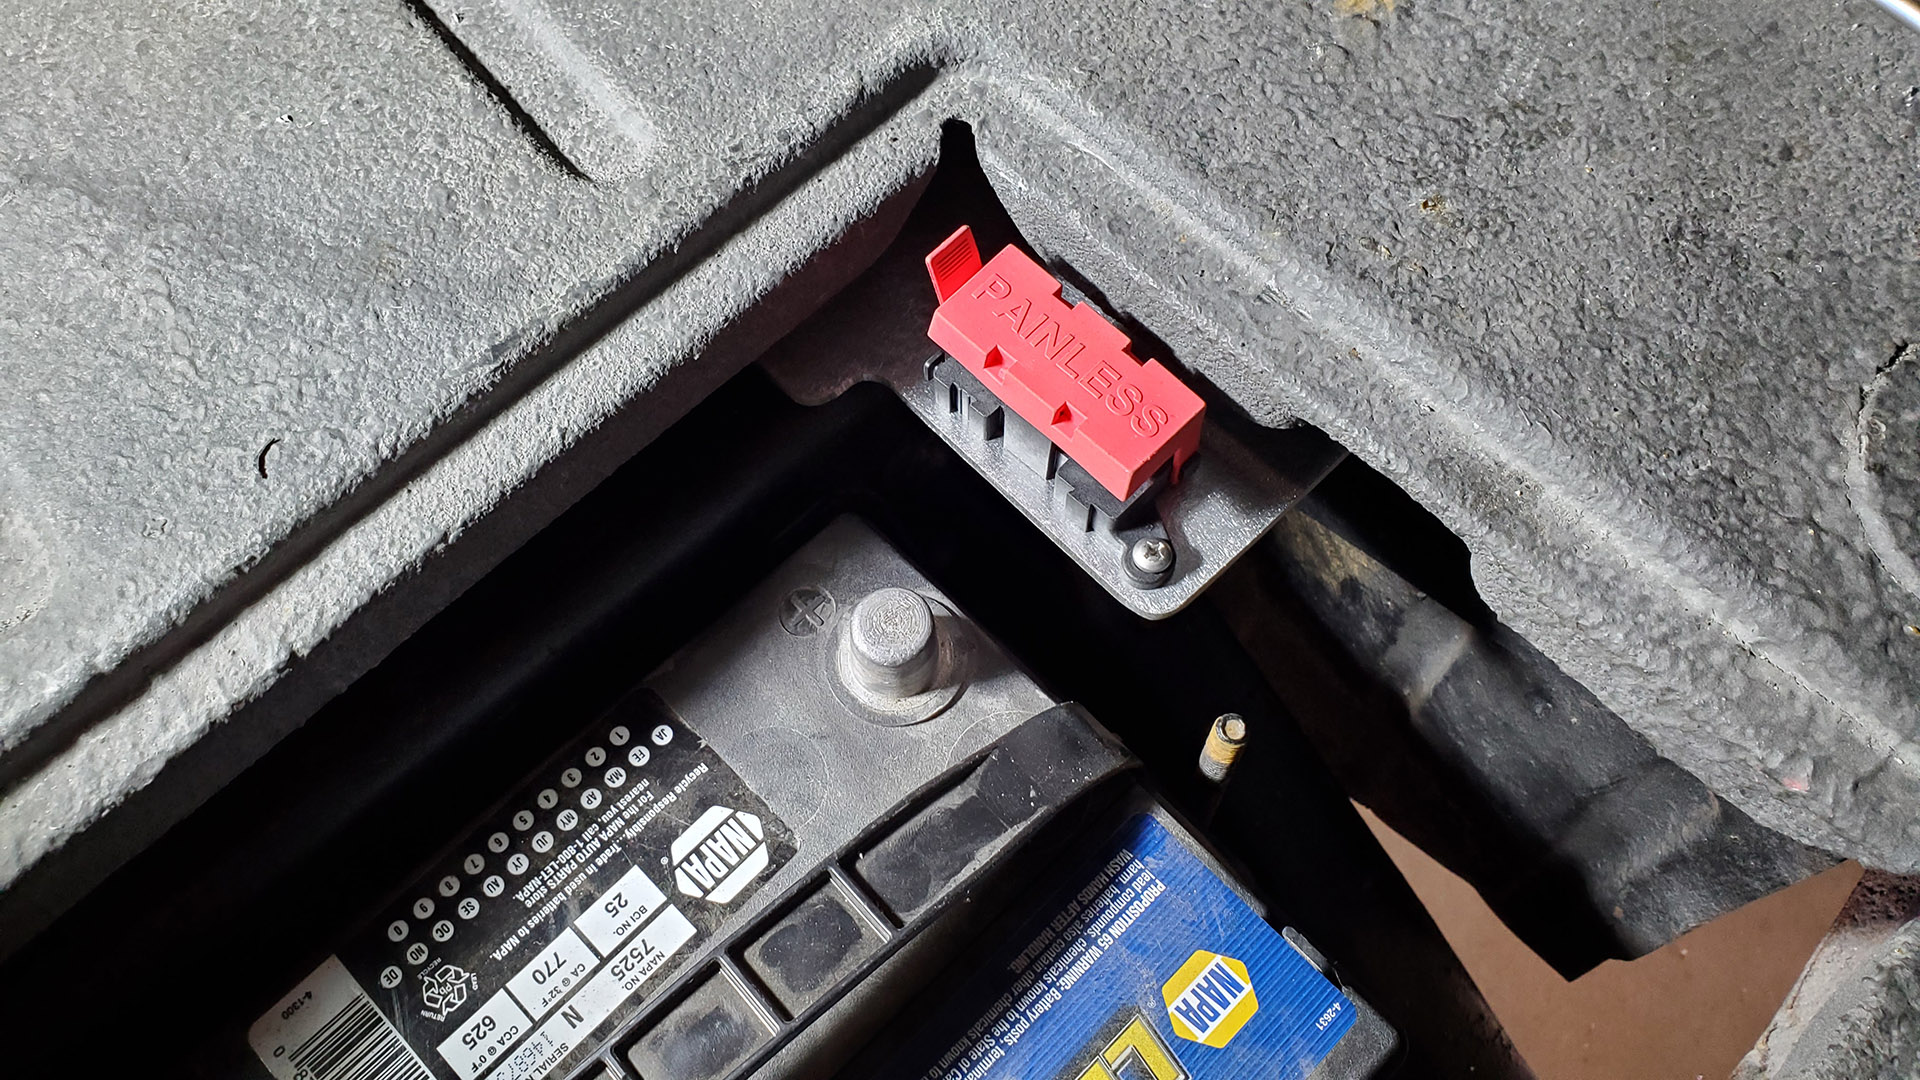 Painless Midi fuse holder mounted on fabbed bracket near battery